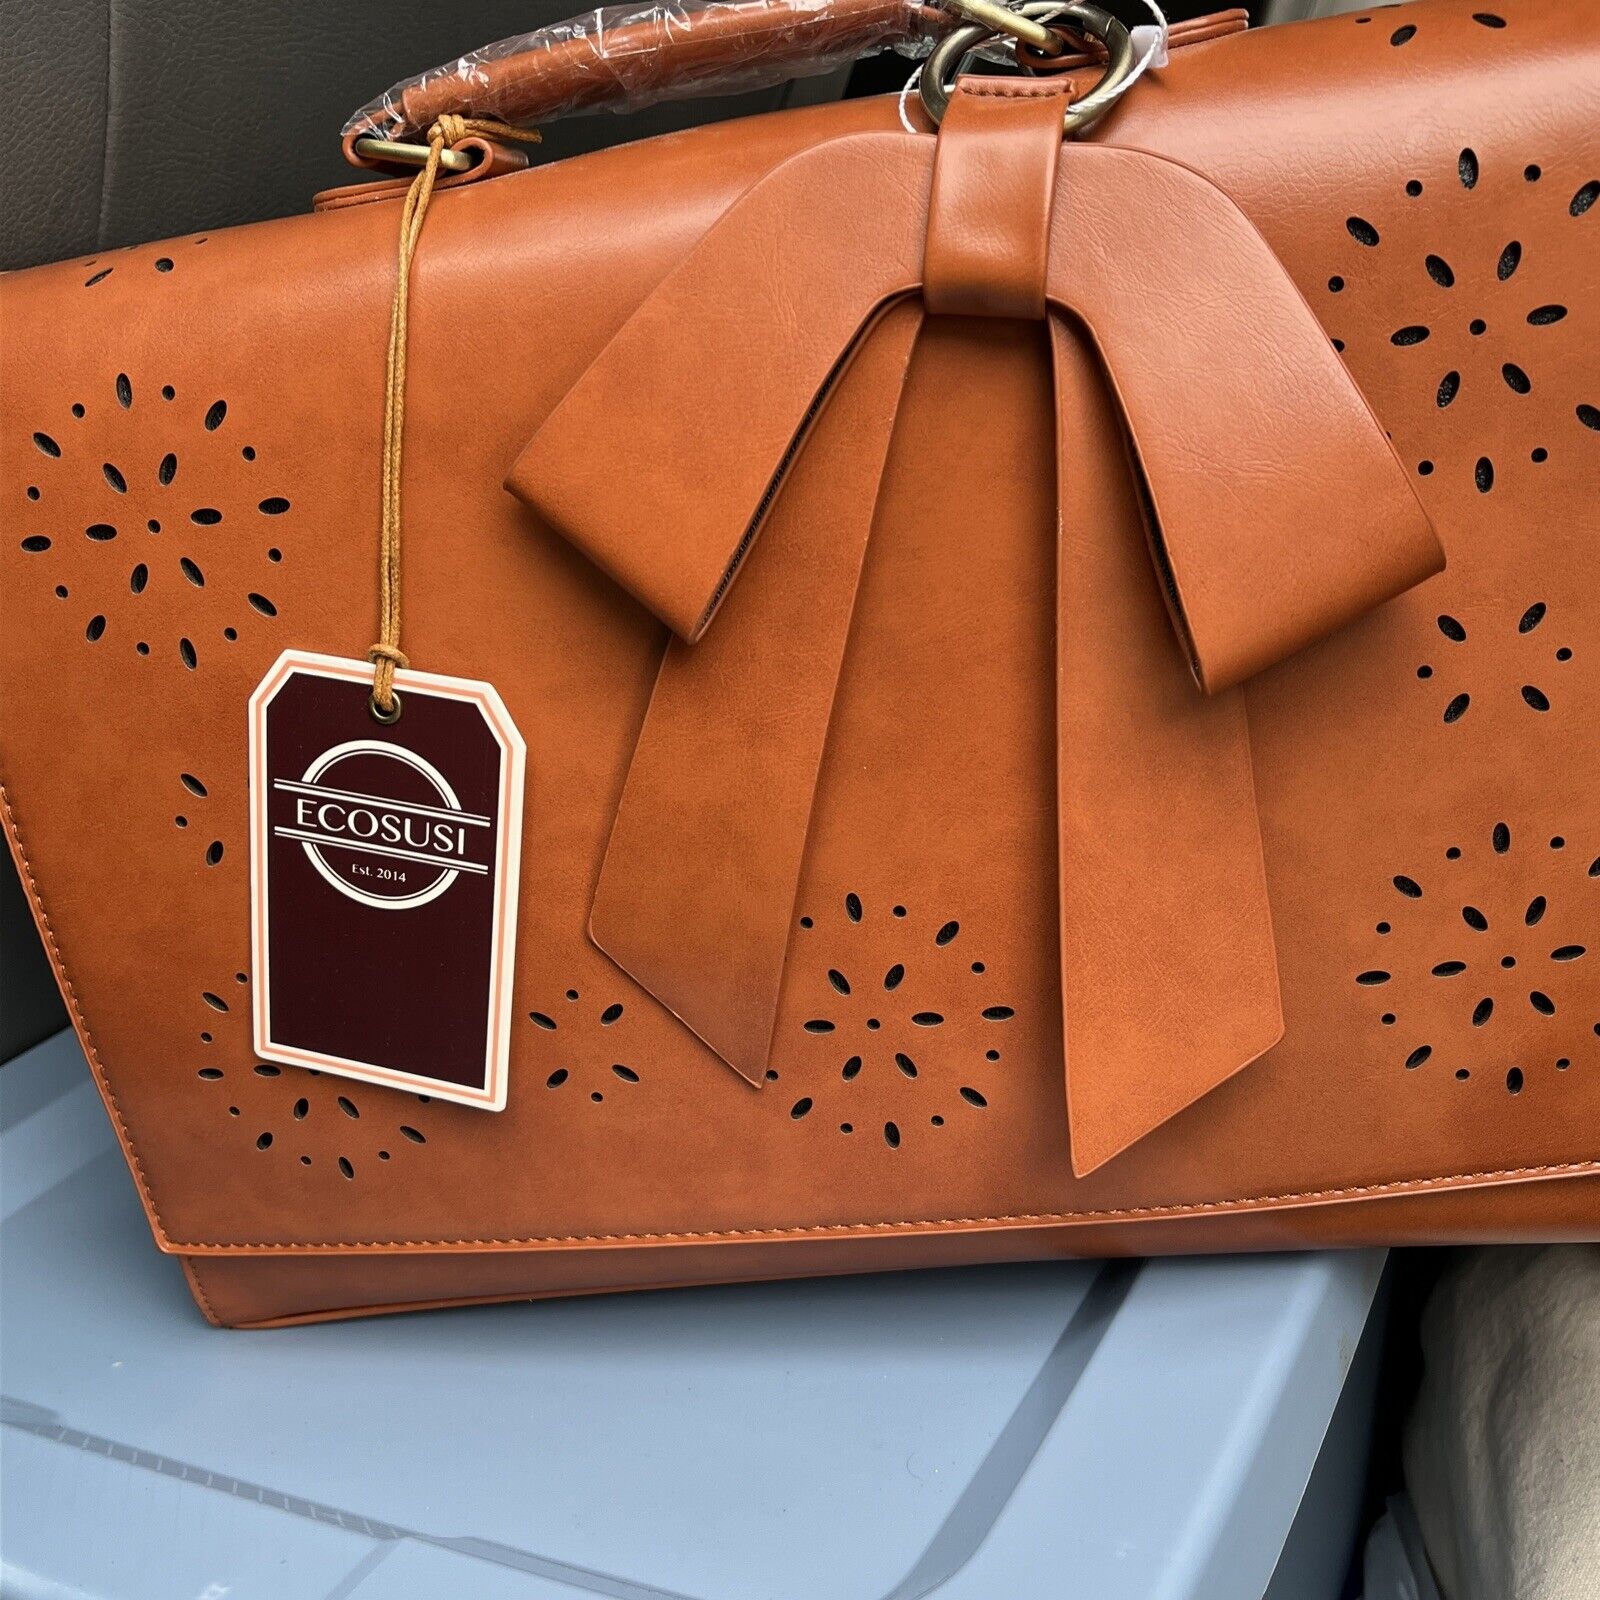 Ecosusi Vegan Leather Laptop Bag For School Satchel Bag Detachable Bow in Coffee